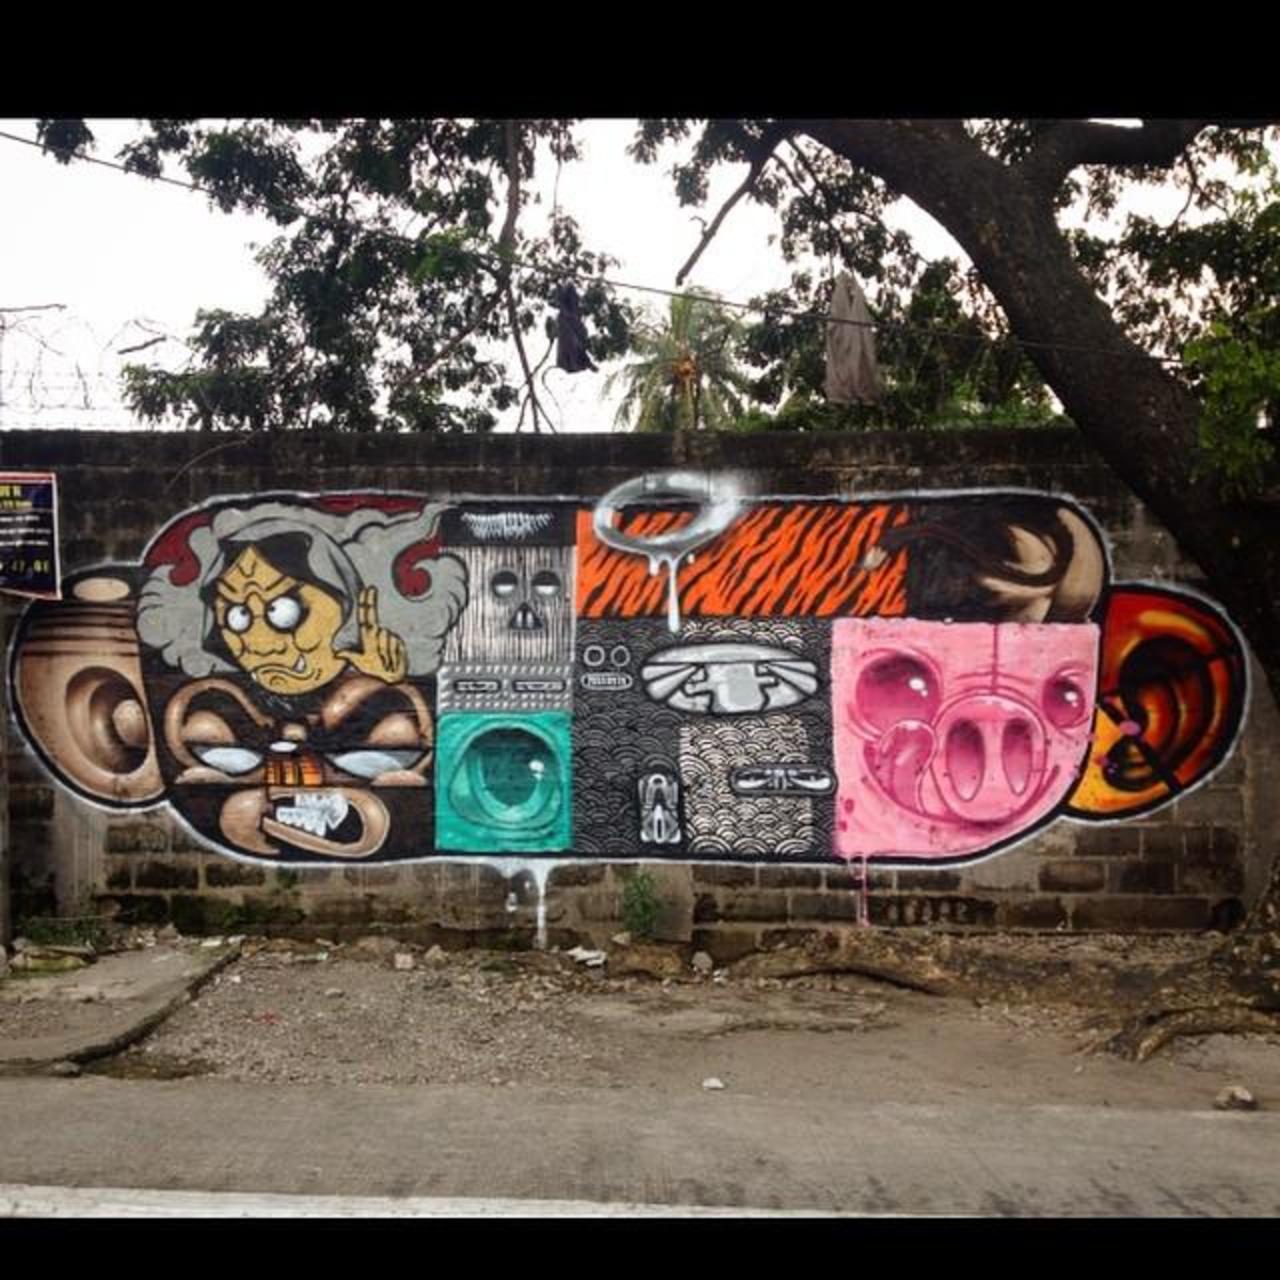 RT @artpushr: via #eggfiasco "http://bit.ly/1PP8tP1" #graffiti #streetart http://t.co/49YY9XuxTr